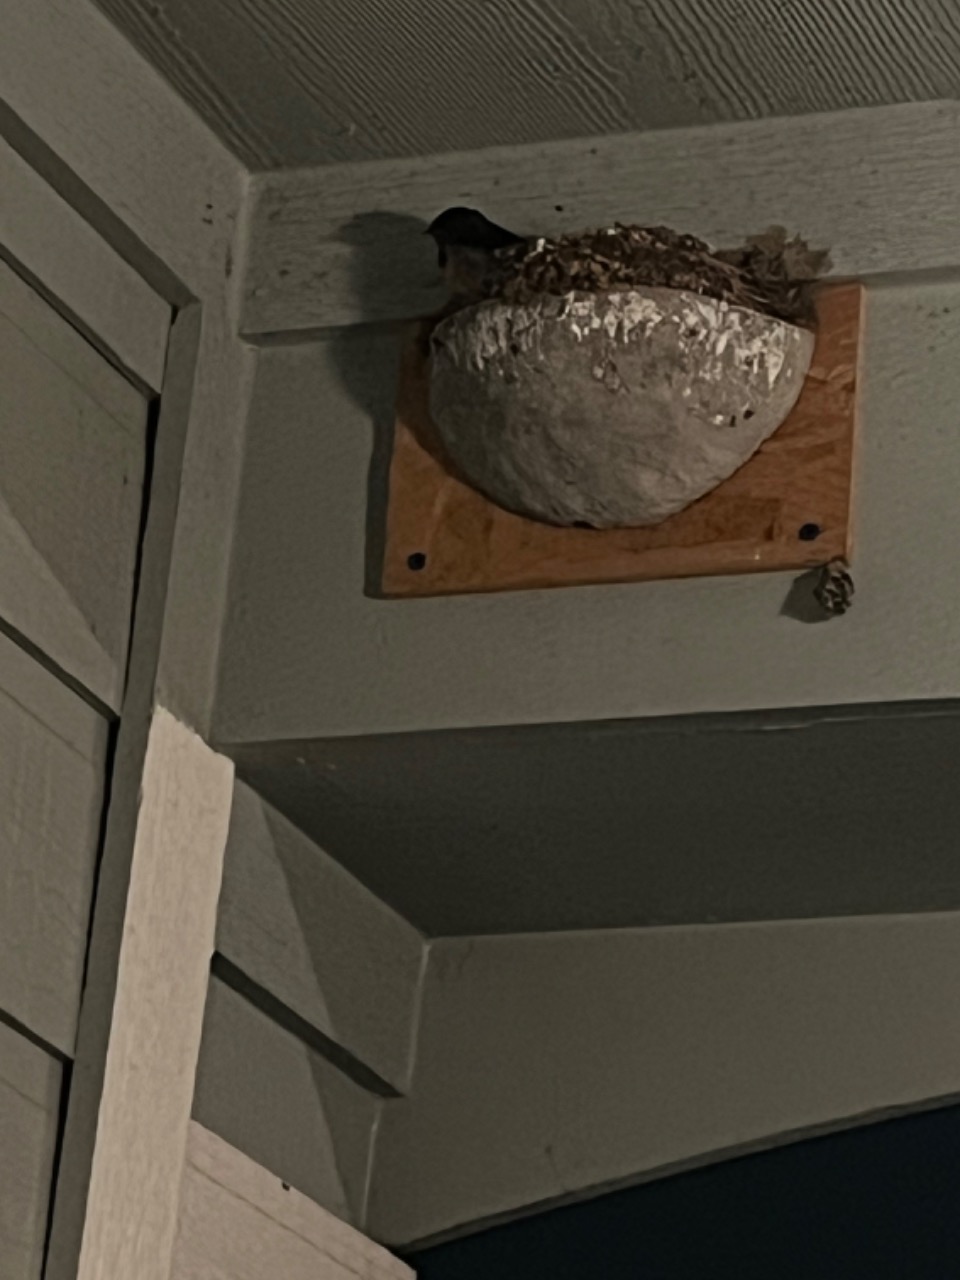 nesting barn swallows